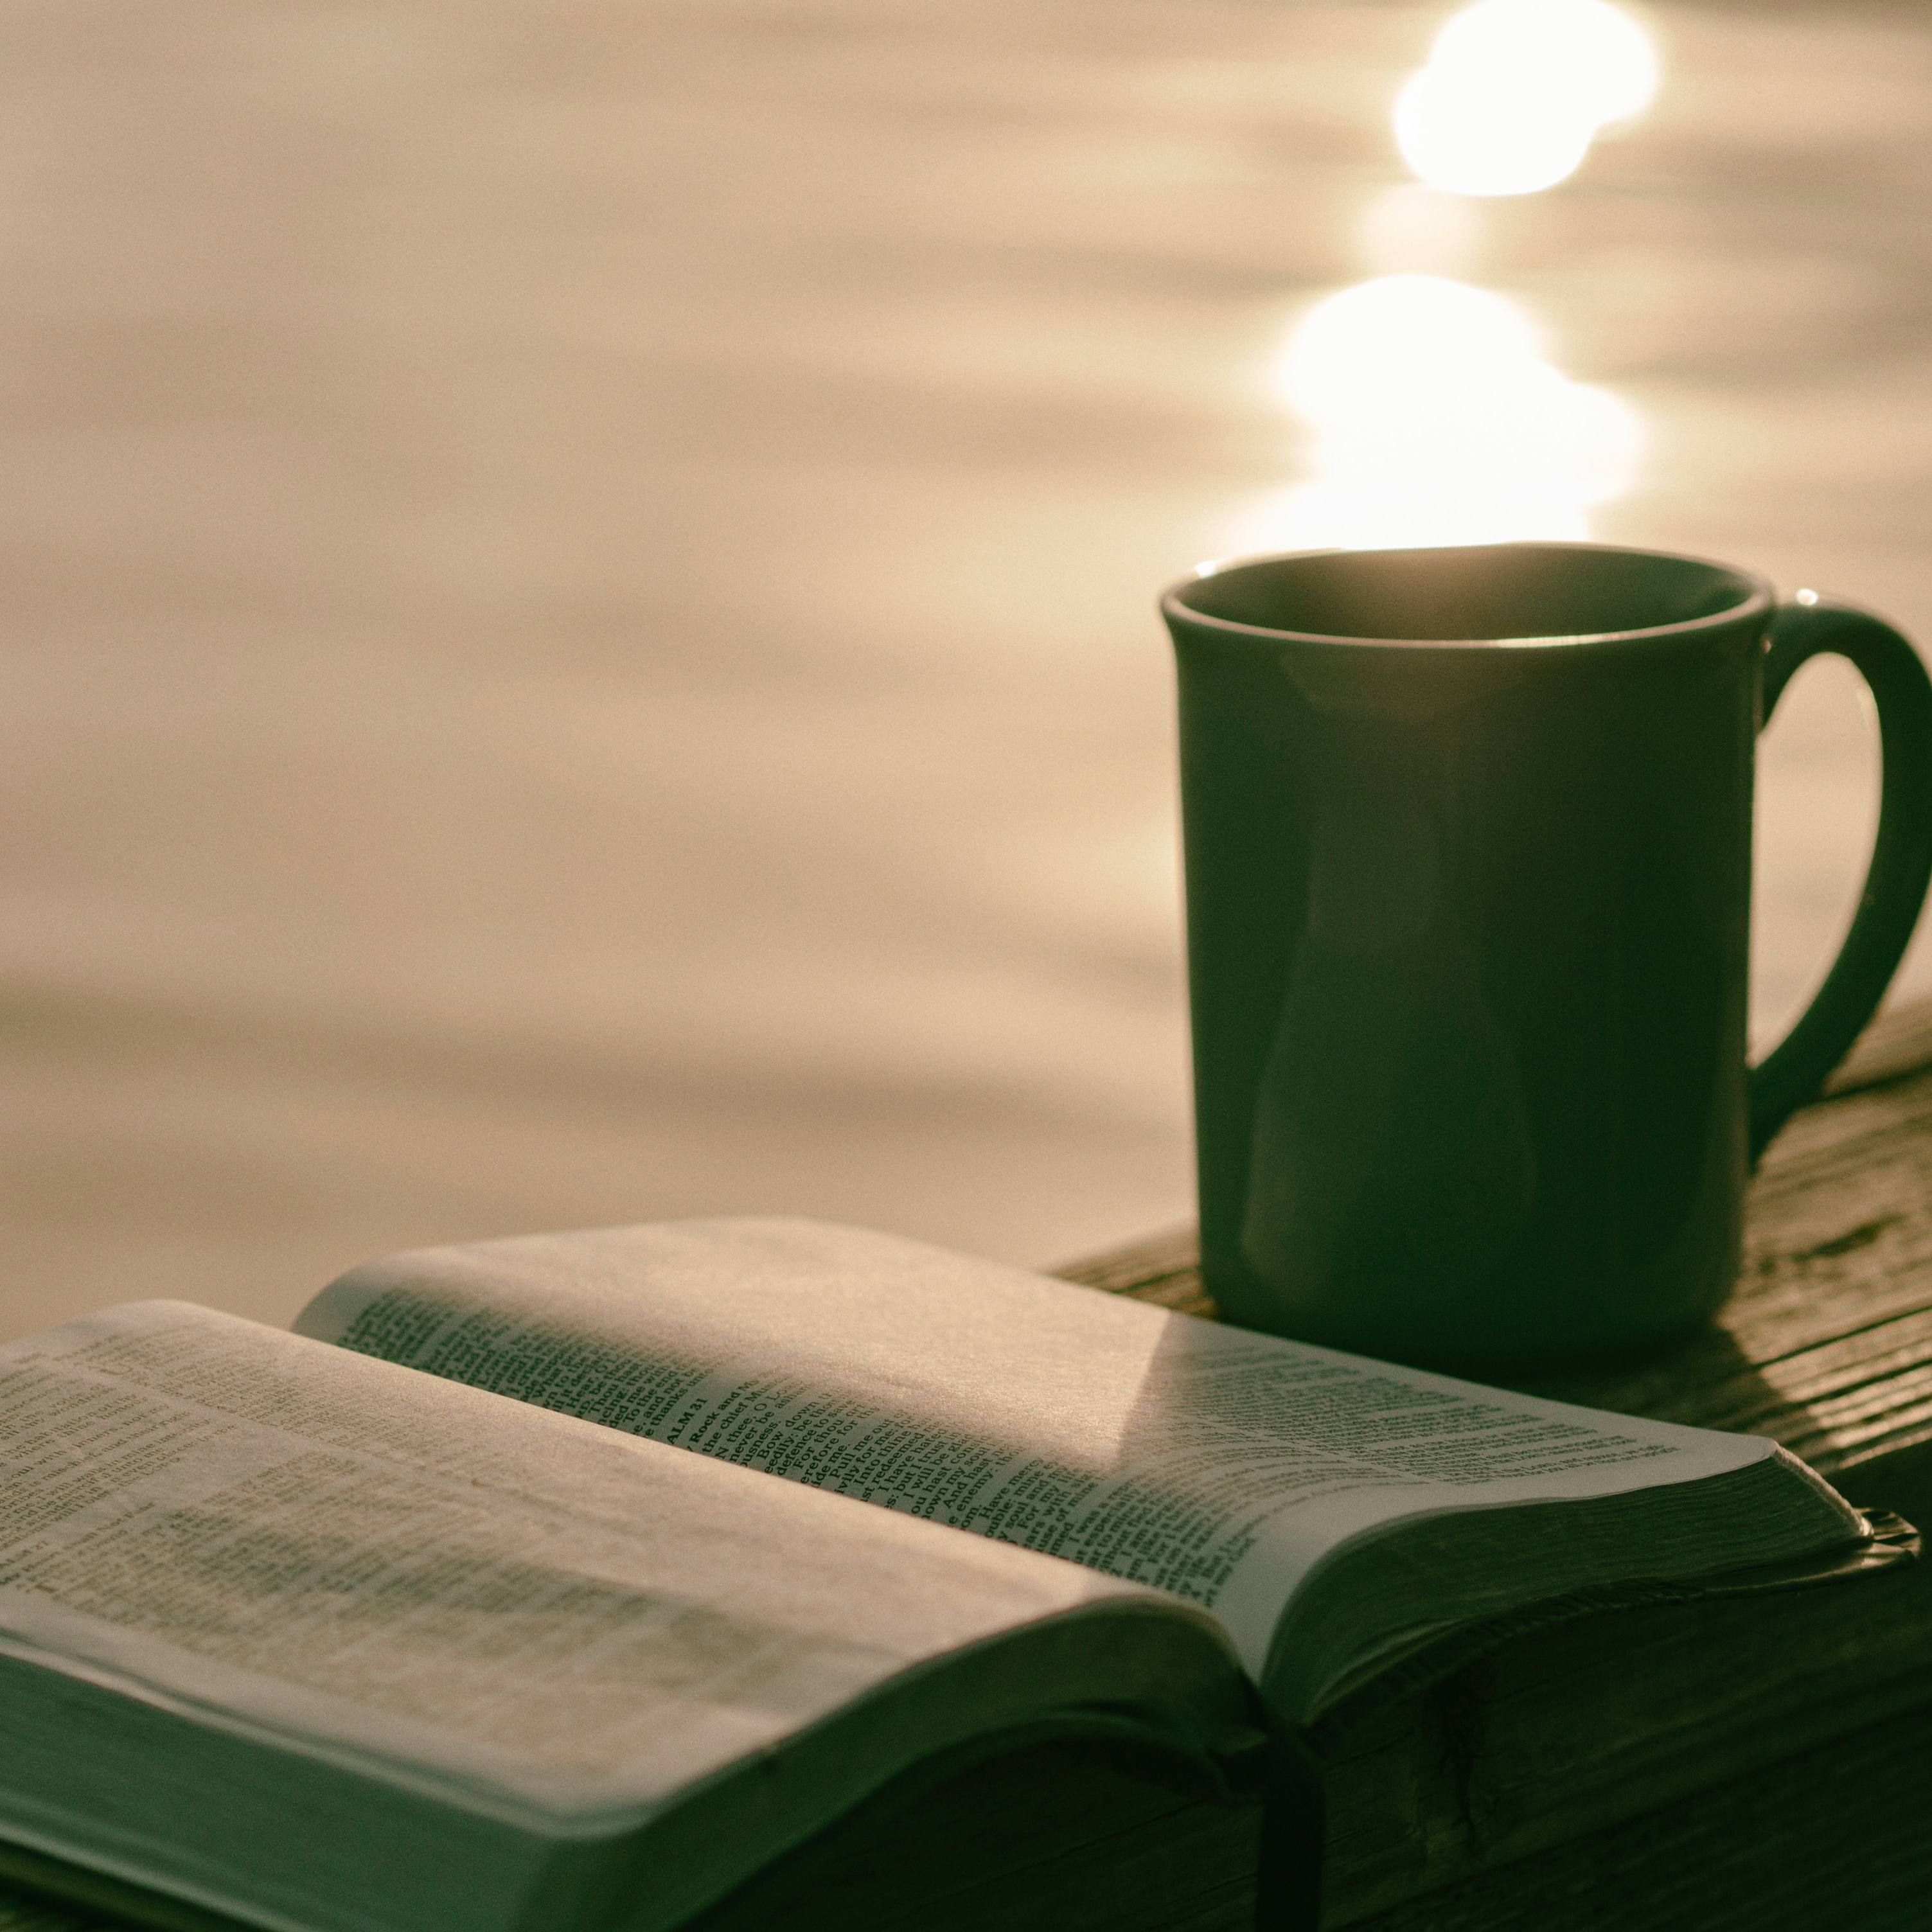 Bible and Coffee at Lake